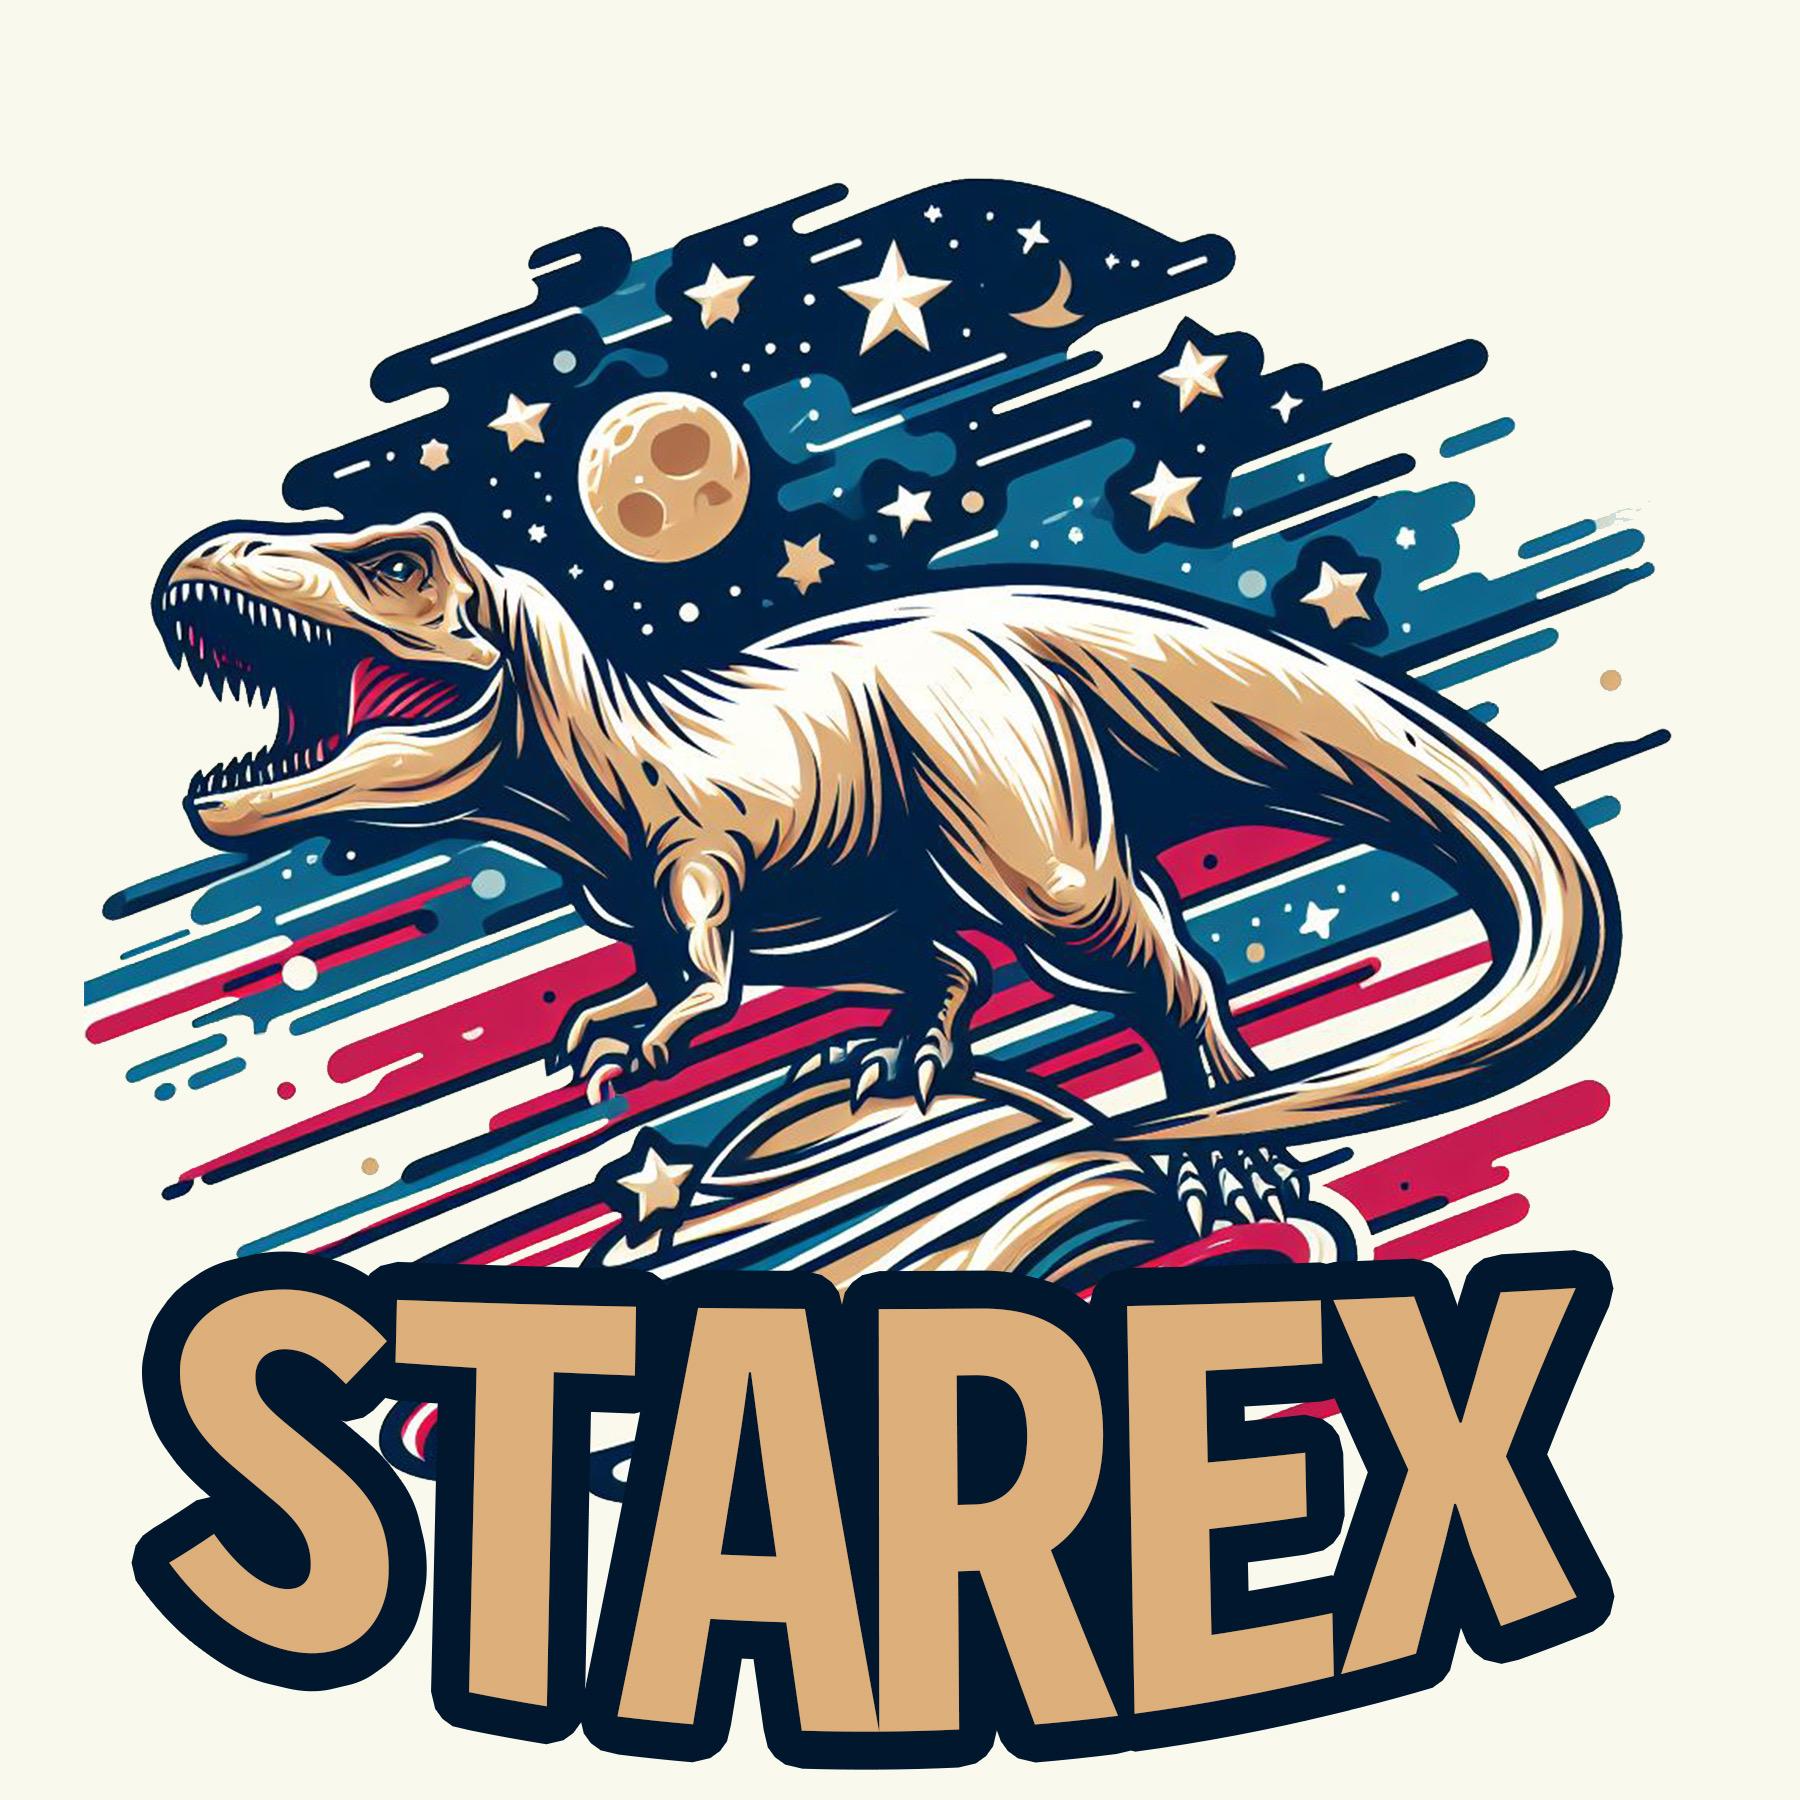 STAREX